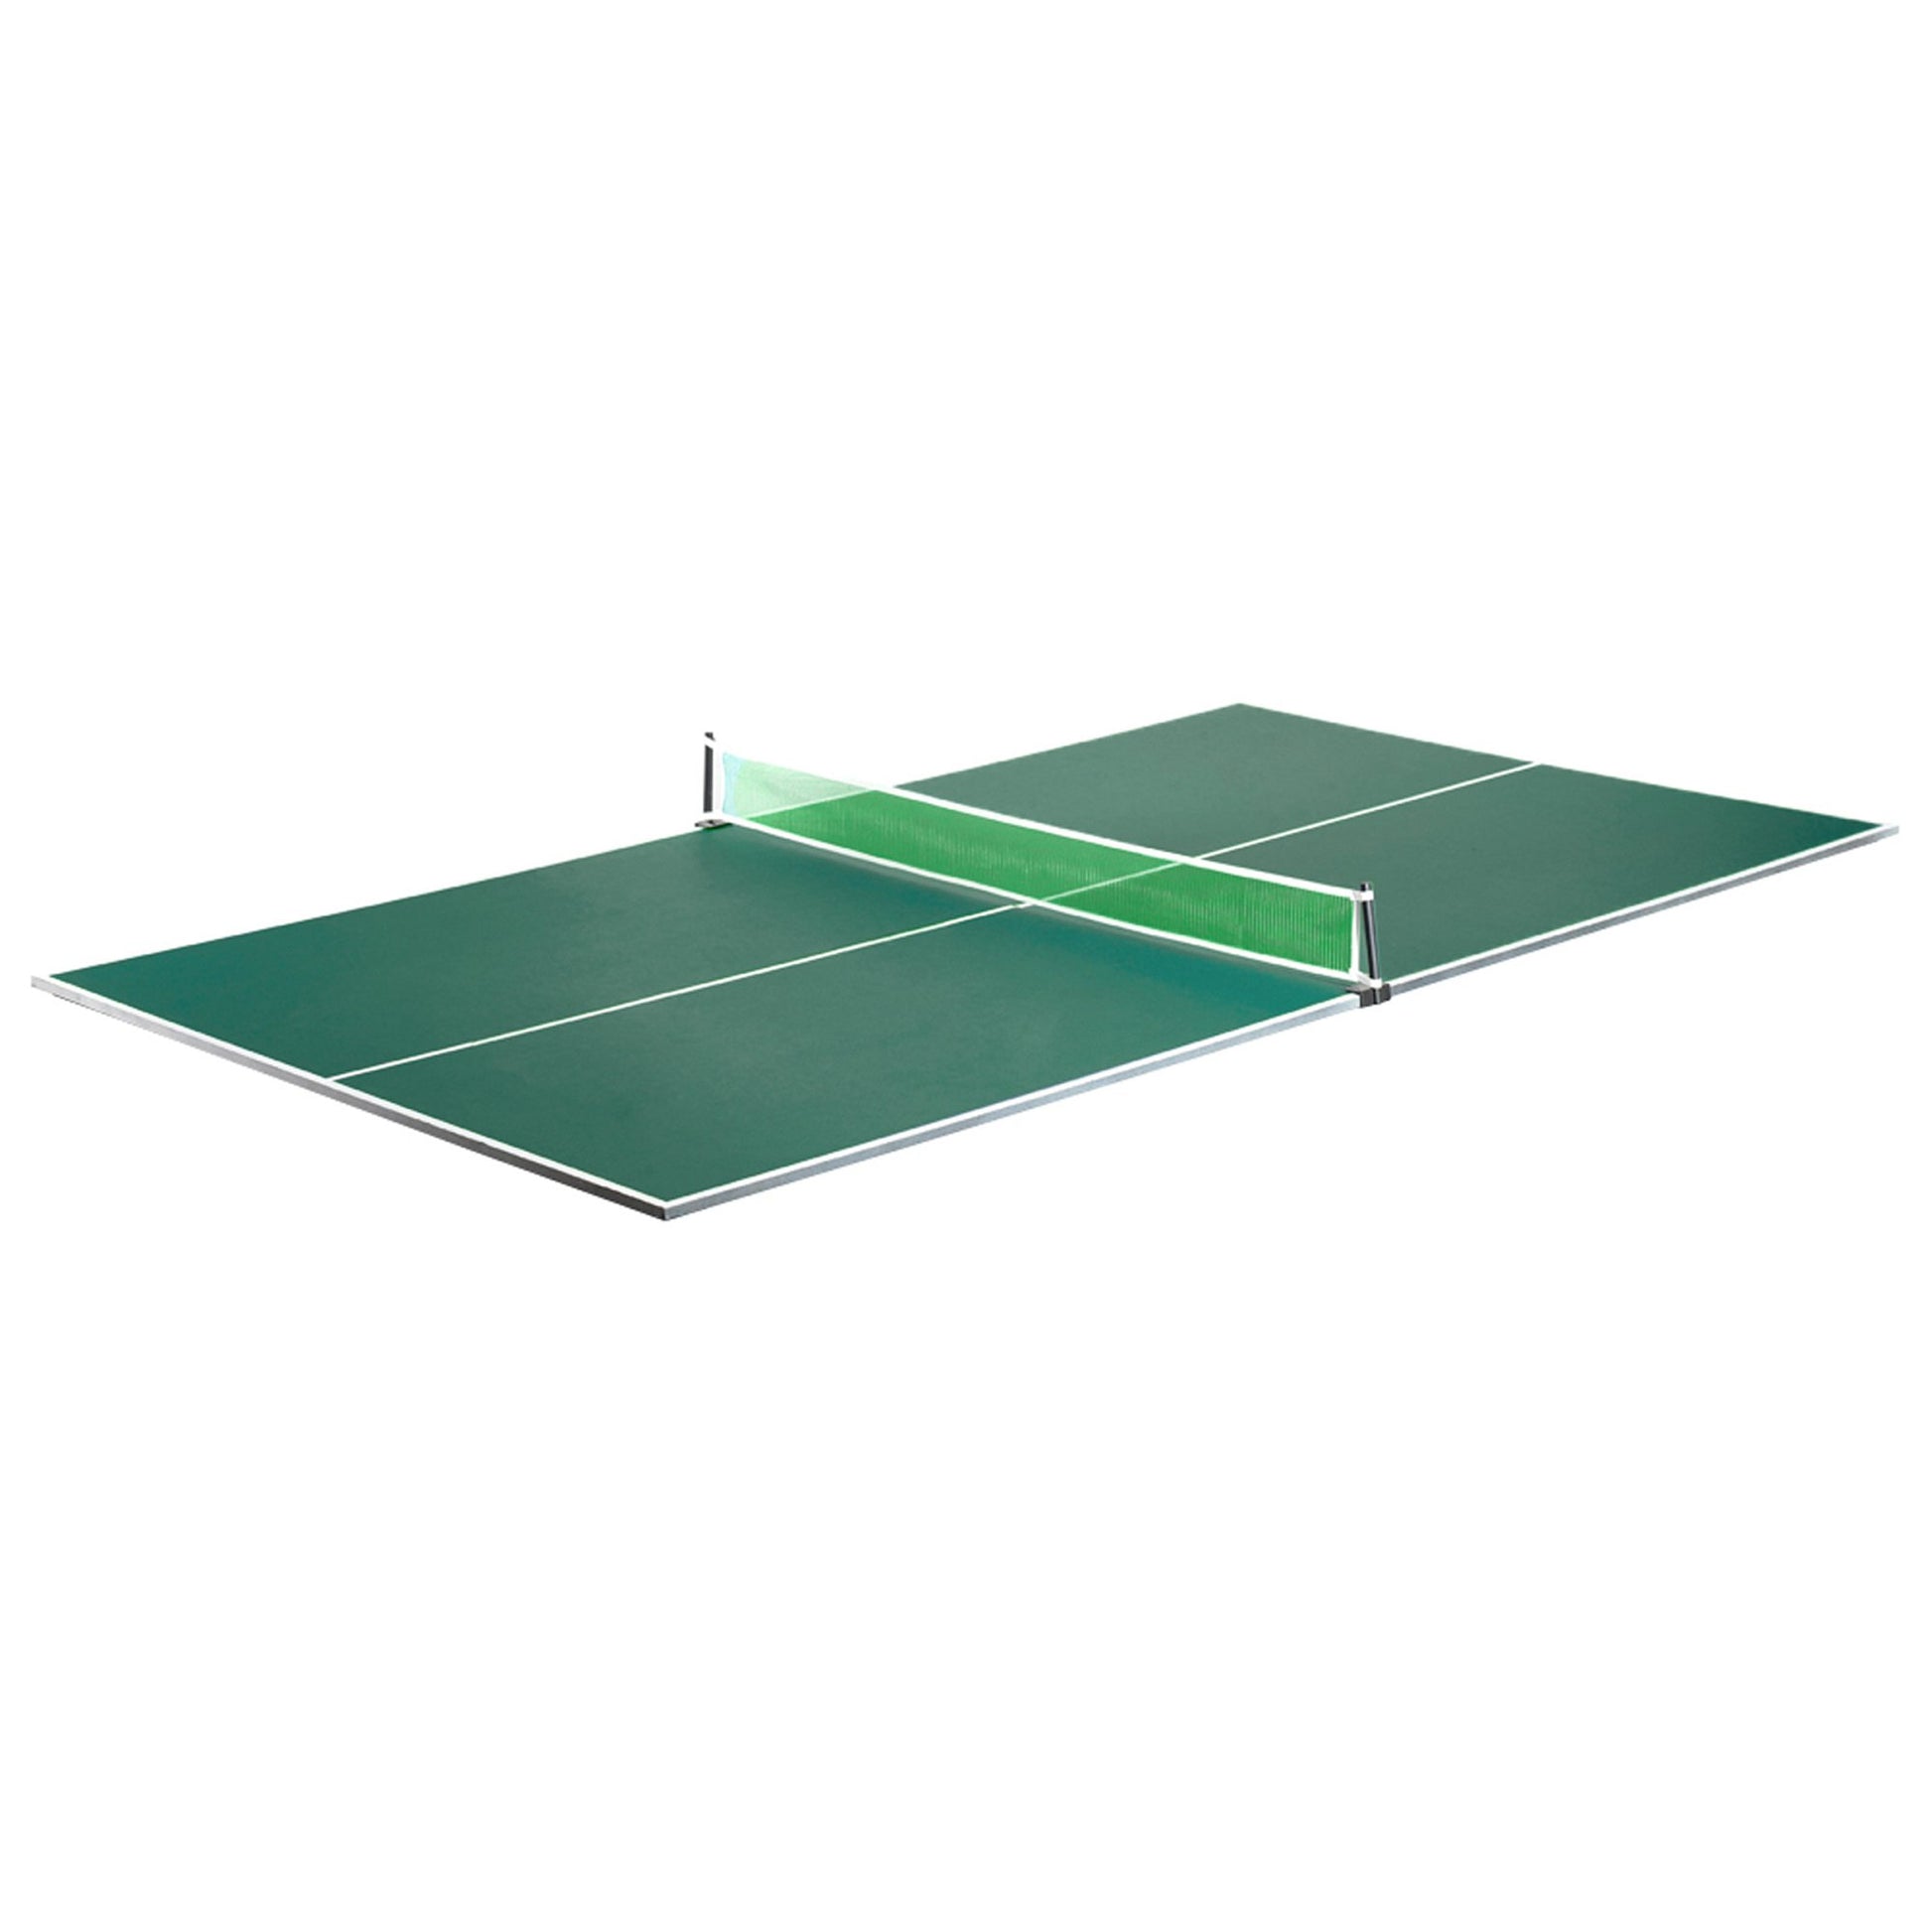 Hathaway Conversion Top Quick Set 9ft Ping Pong Table - Gaming Blaze